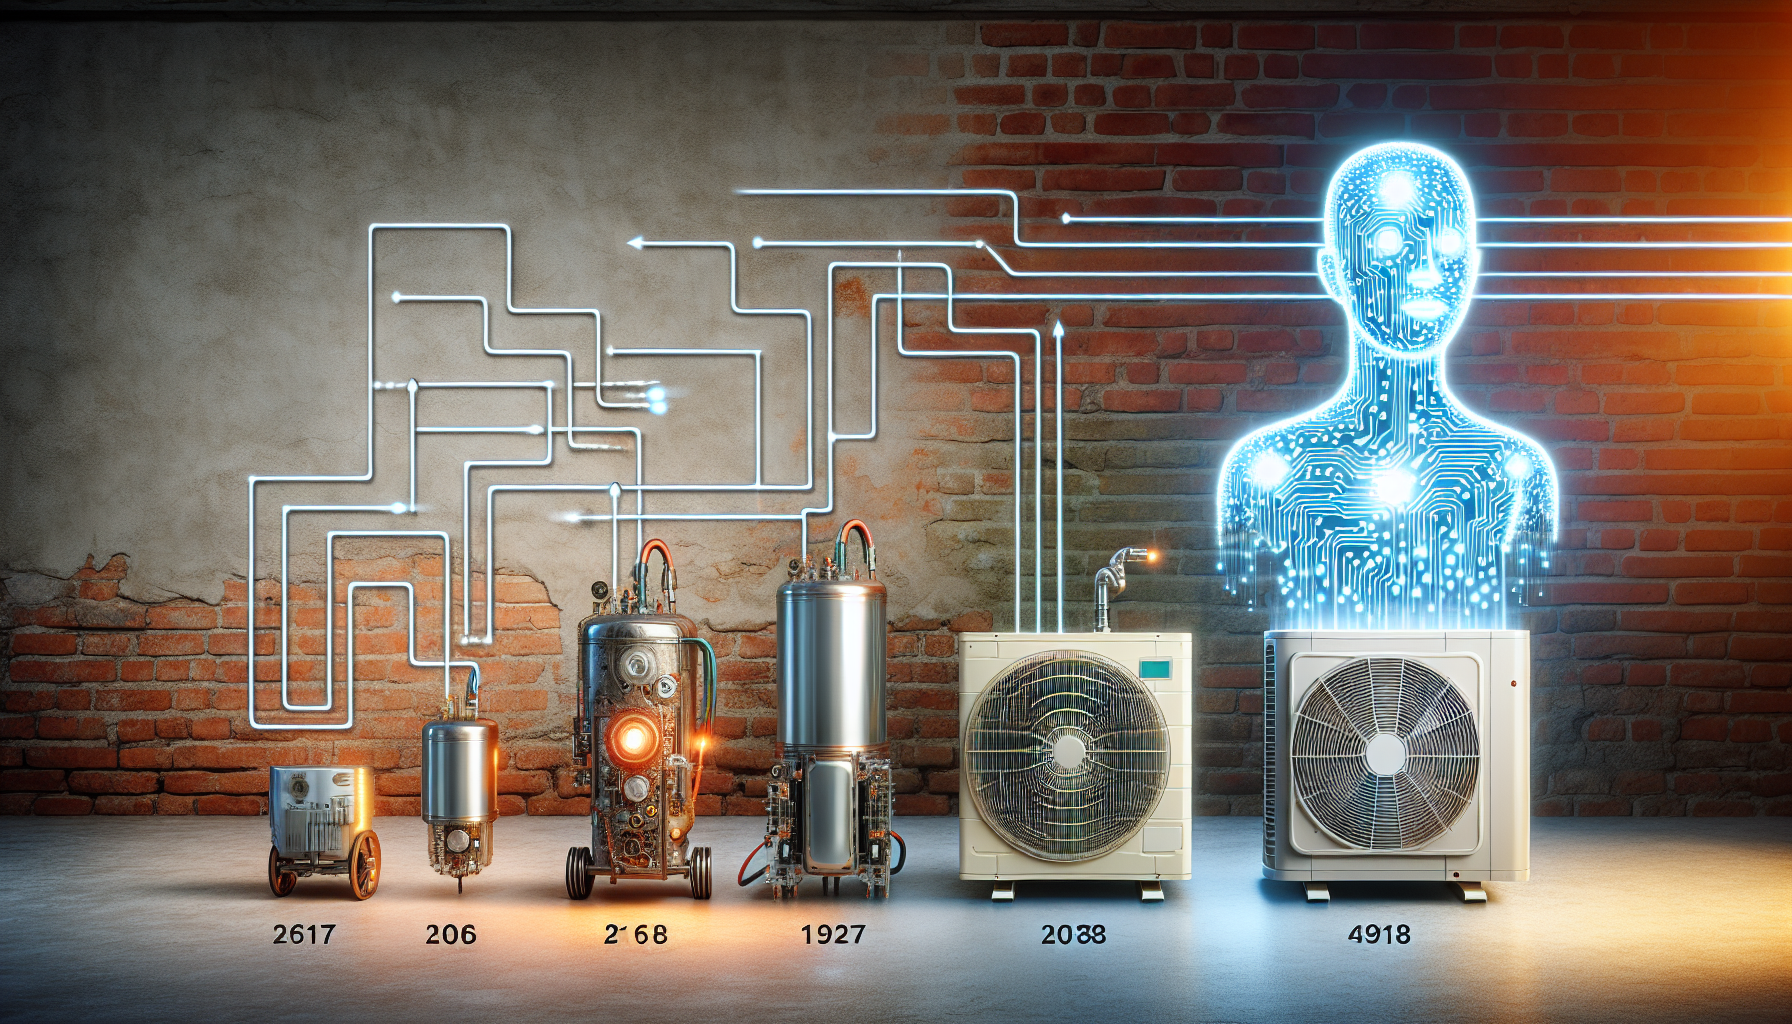 Illustration of the evolution of heat pump technology